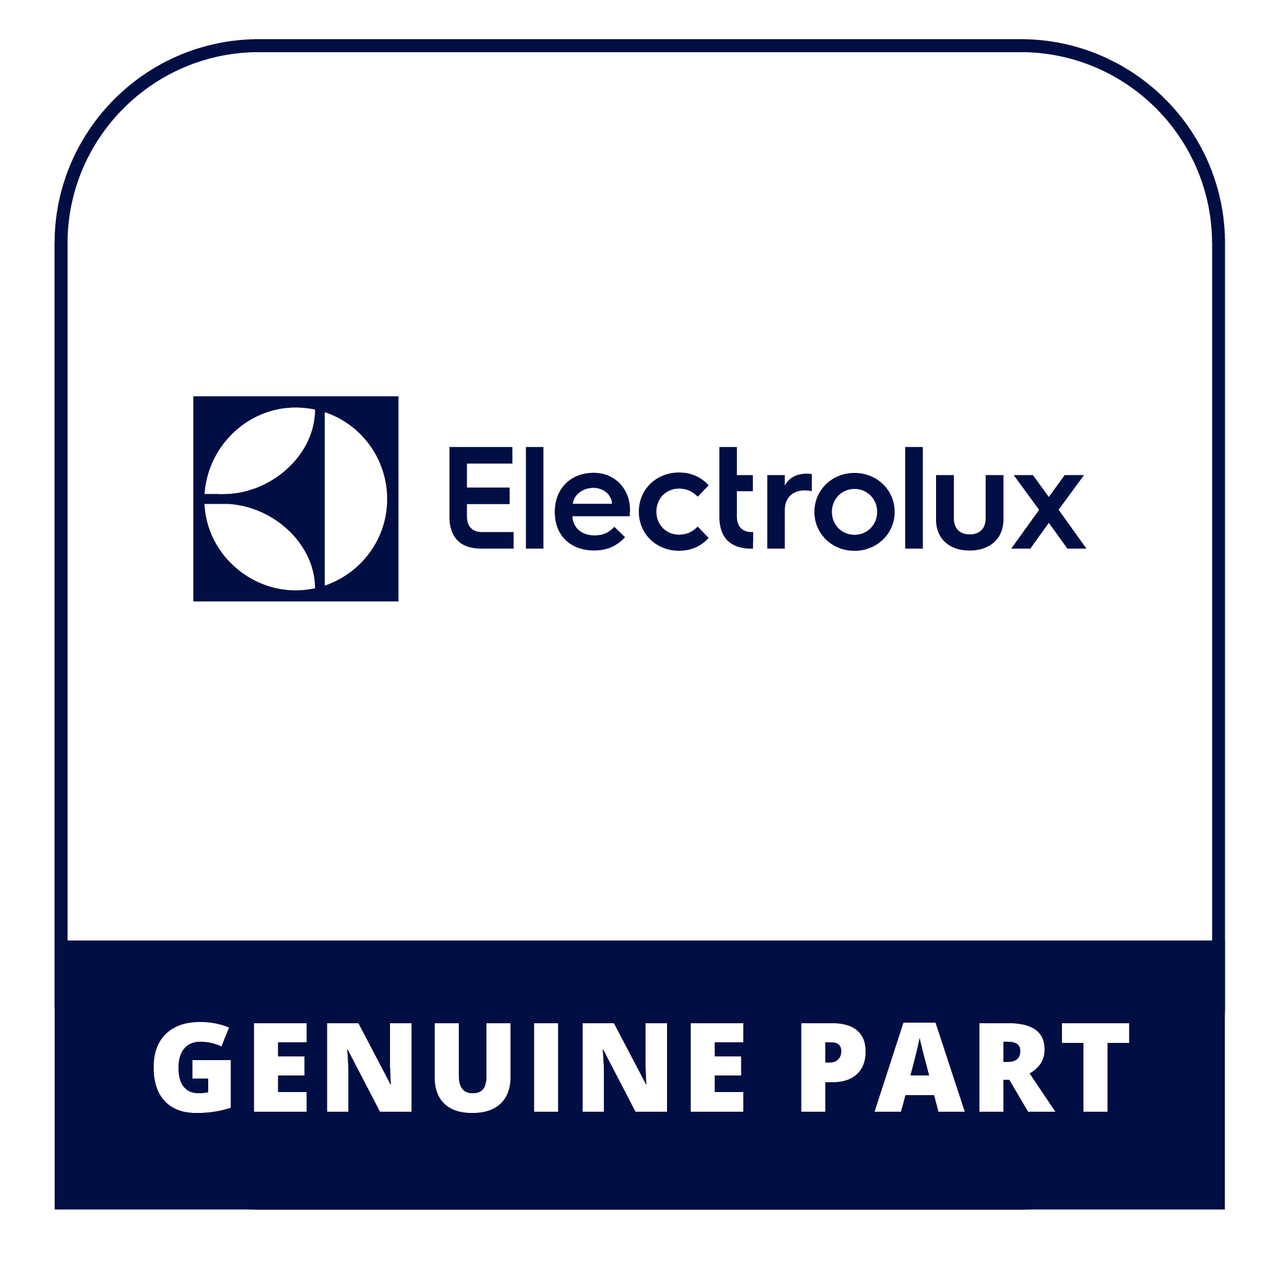 Frigidaire - Electrolux 5304527610 Box & Wires Assy - Genuine Electrolux Part